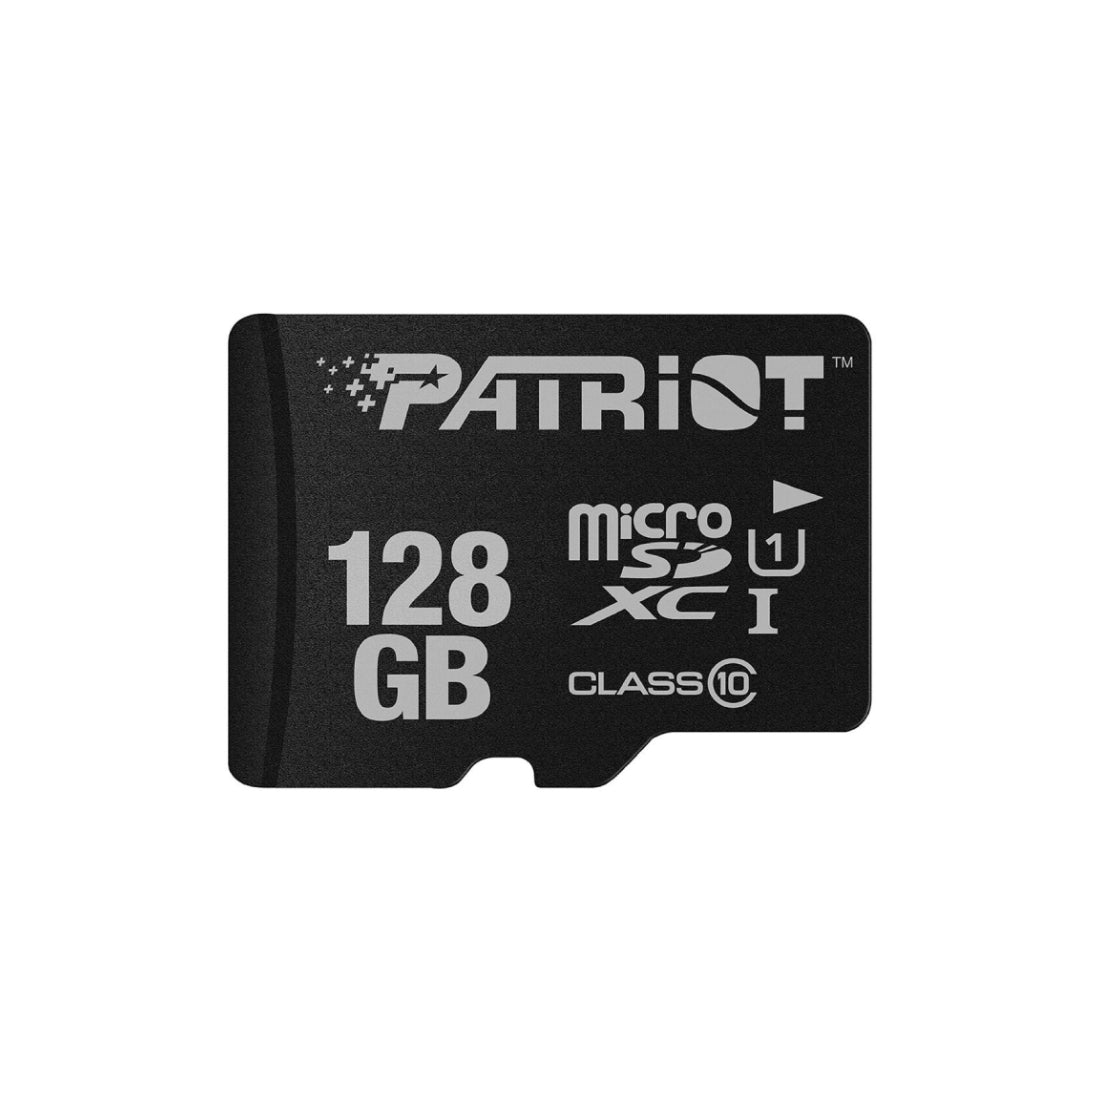 Patriot LX Series 128GB Micro SD Card - مساحة تخزين - Store 974 | ستور ٩٧٤